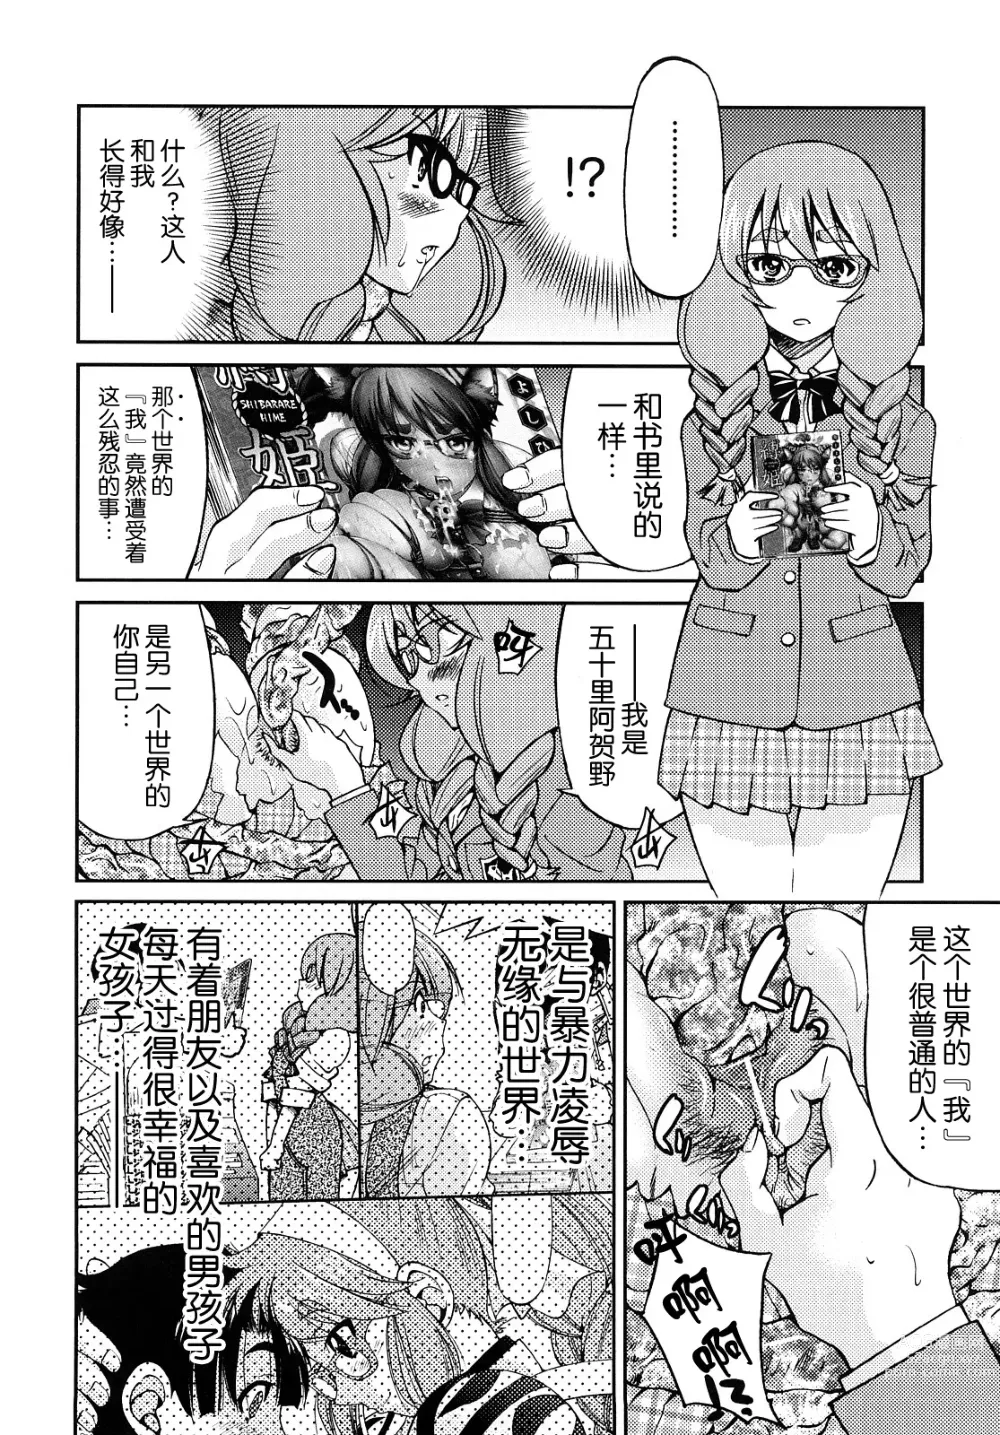 Page 213 of manga Shibarare Hime